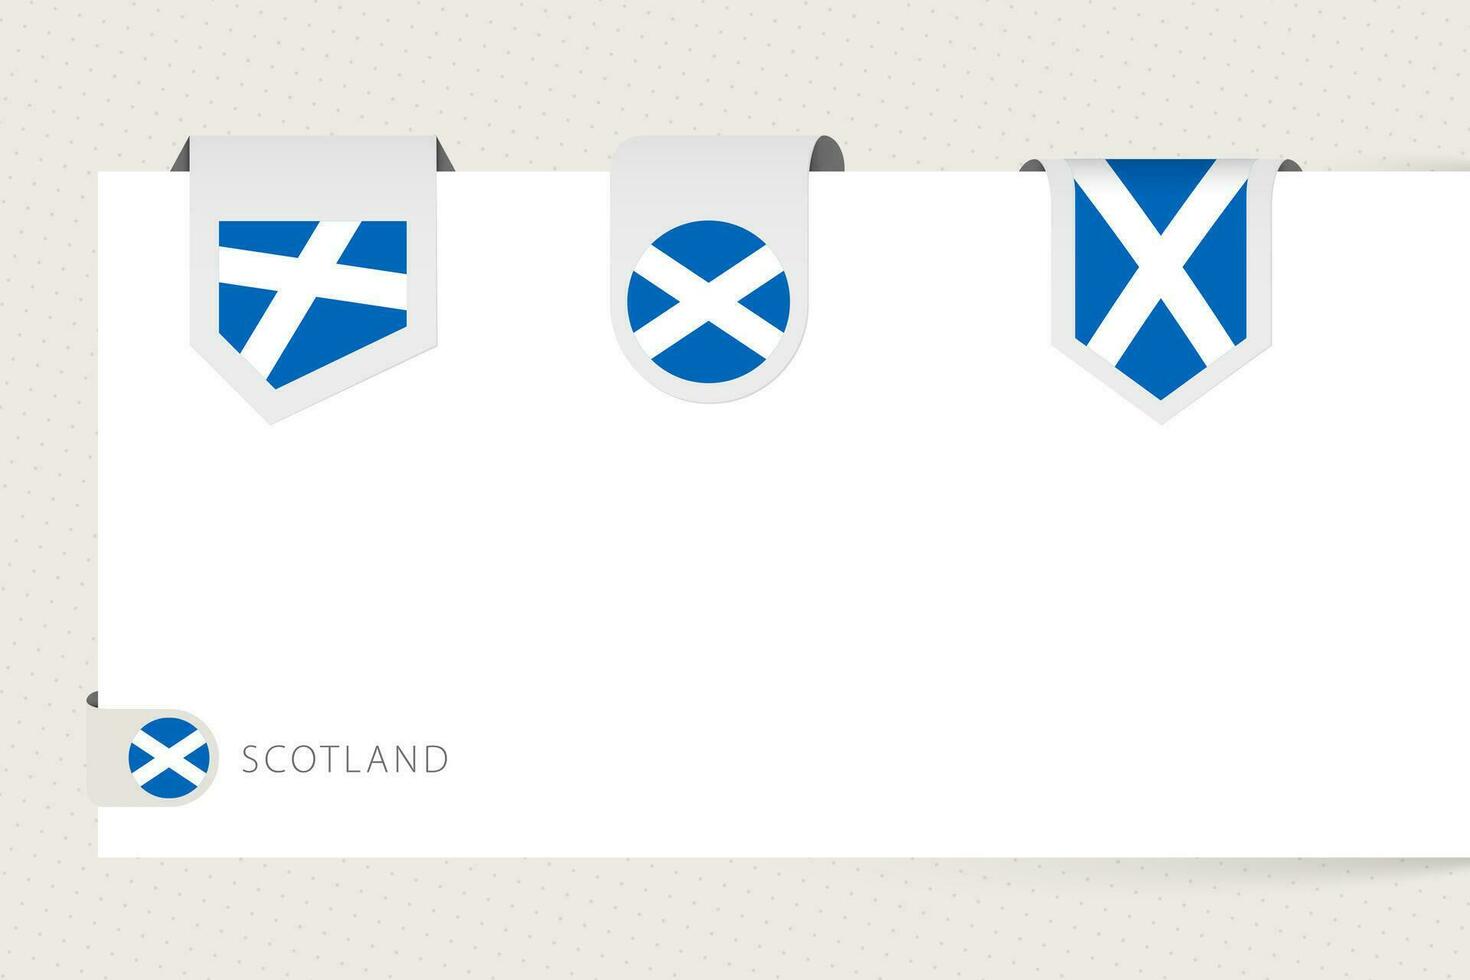 etiqueta bandera colección de Escocia en diferente forma. cinta bandera modelo de Escocia vector